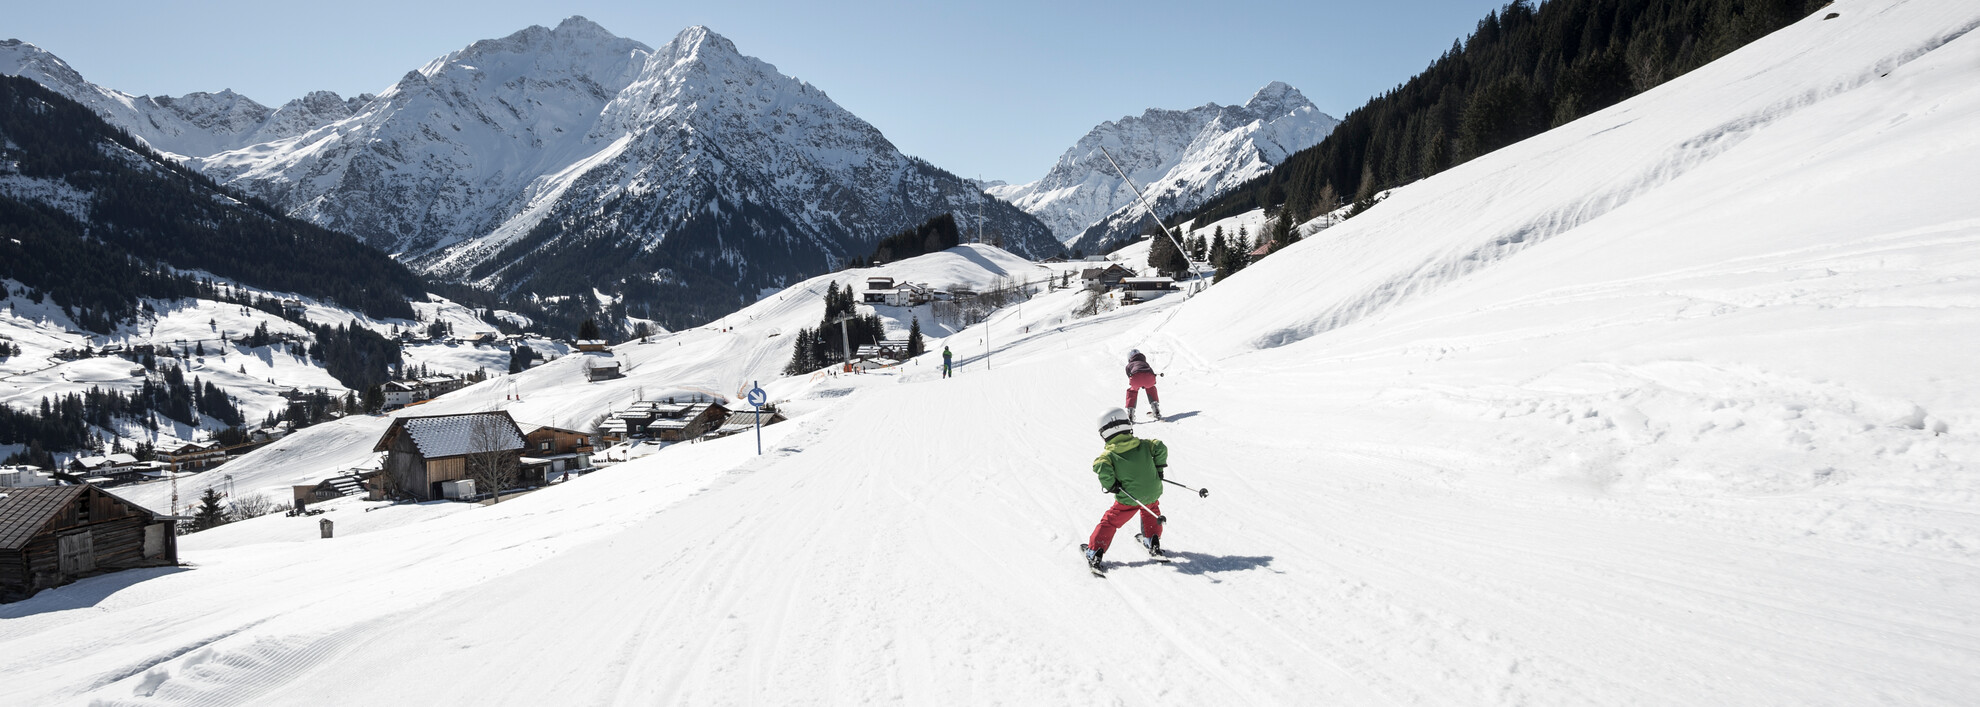 Skiing in the valley Kleinwalsertal | © Kleinwalsertal Tourismus eGen | Photographer: Dominik Berchtold